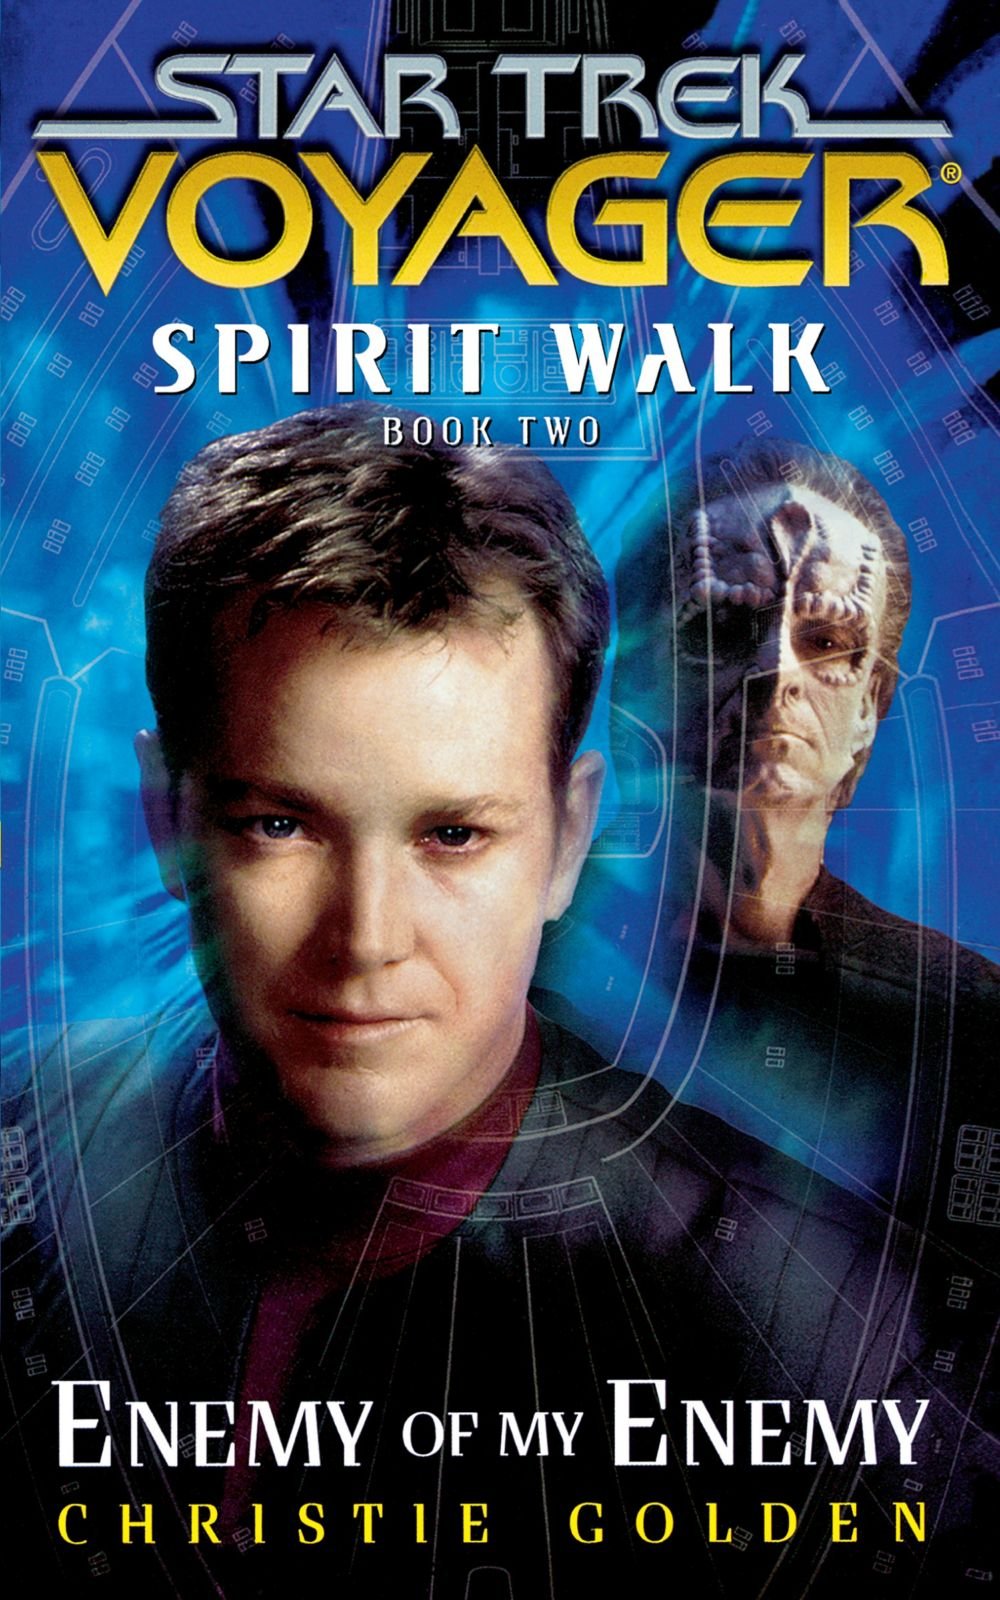 “Star Trek: Voyager: Spirit Walk Book 2: Enemy of My Enemy” Review by Literary Treks